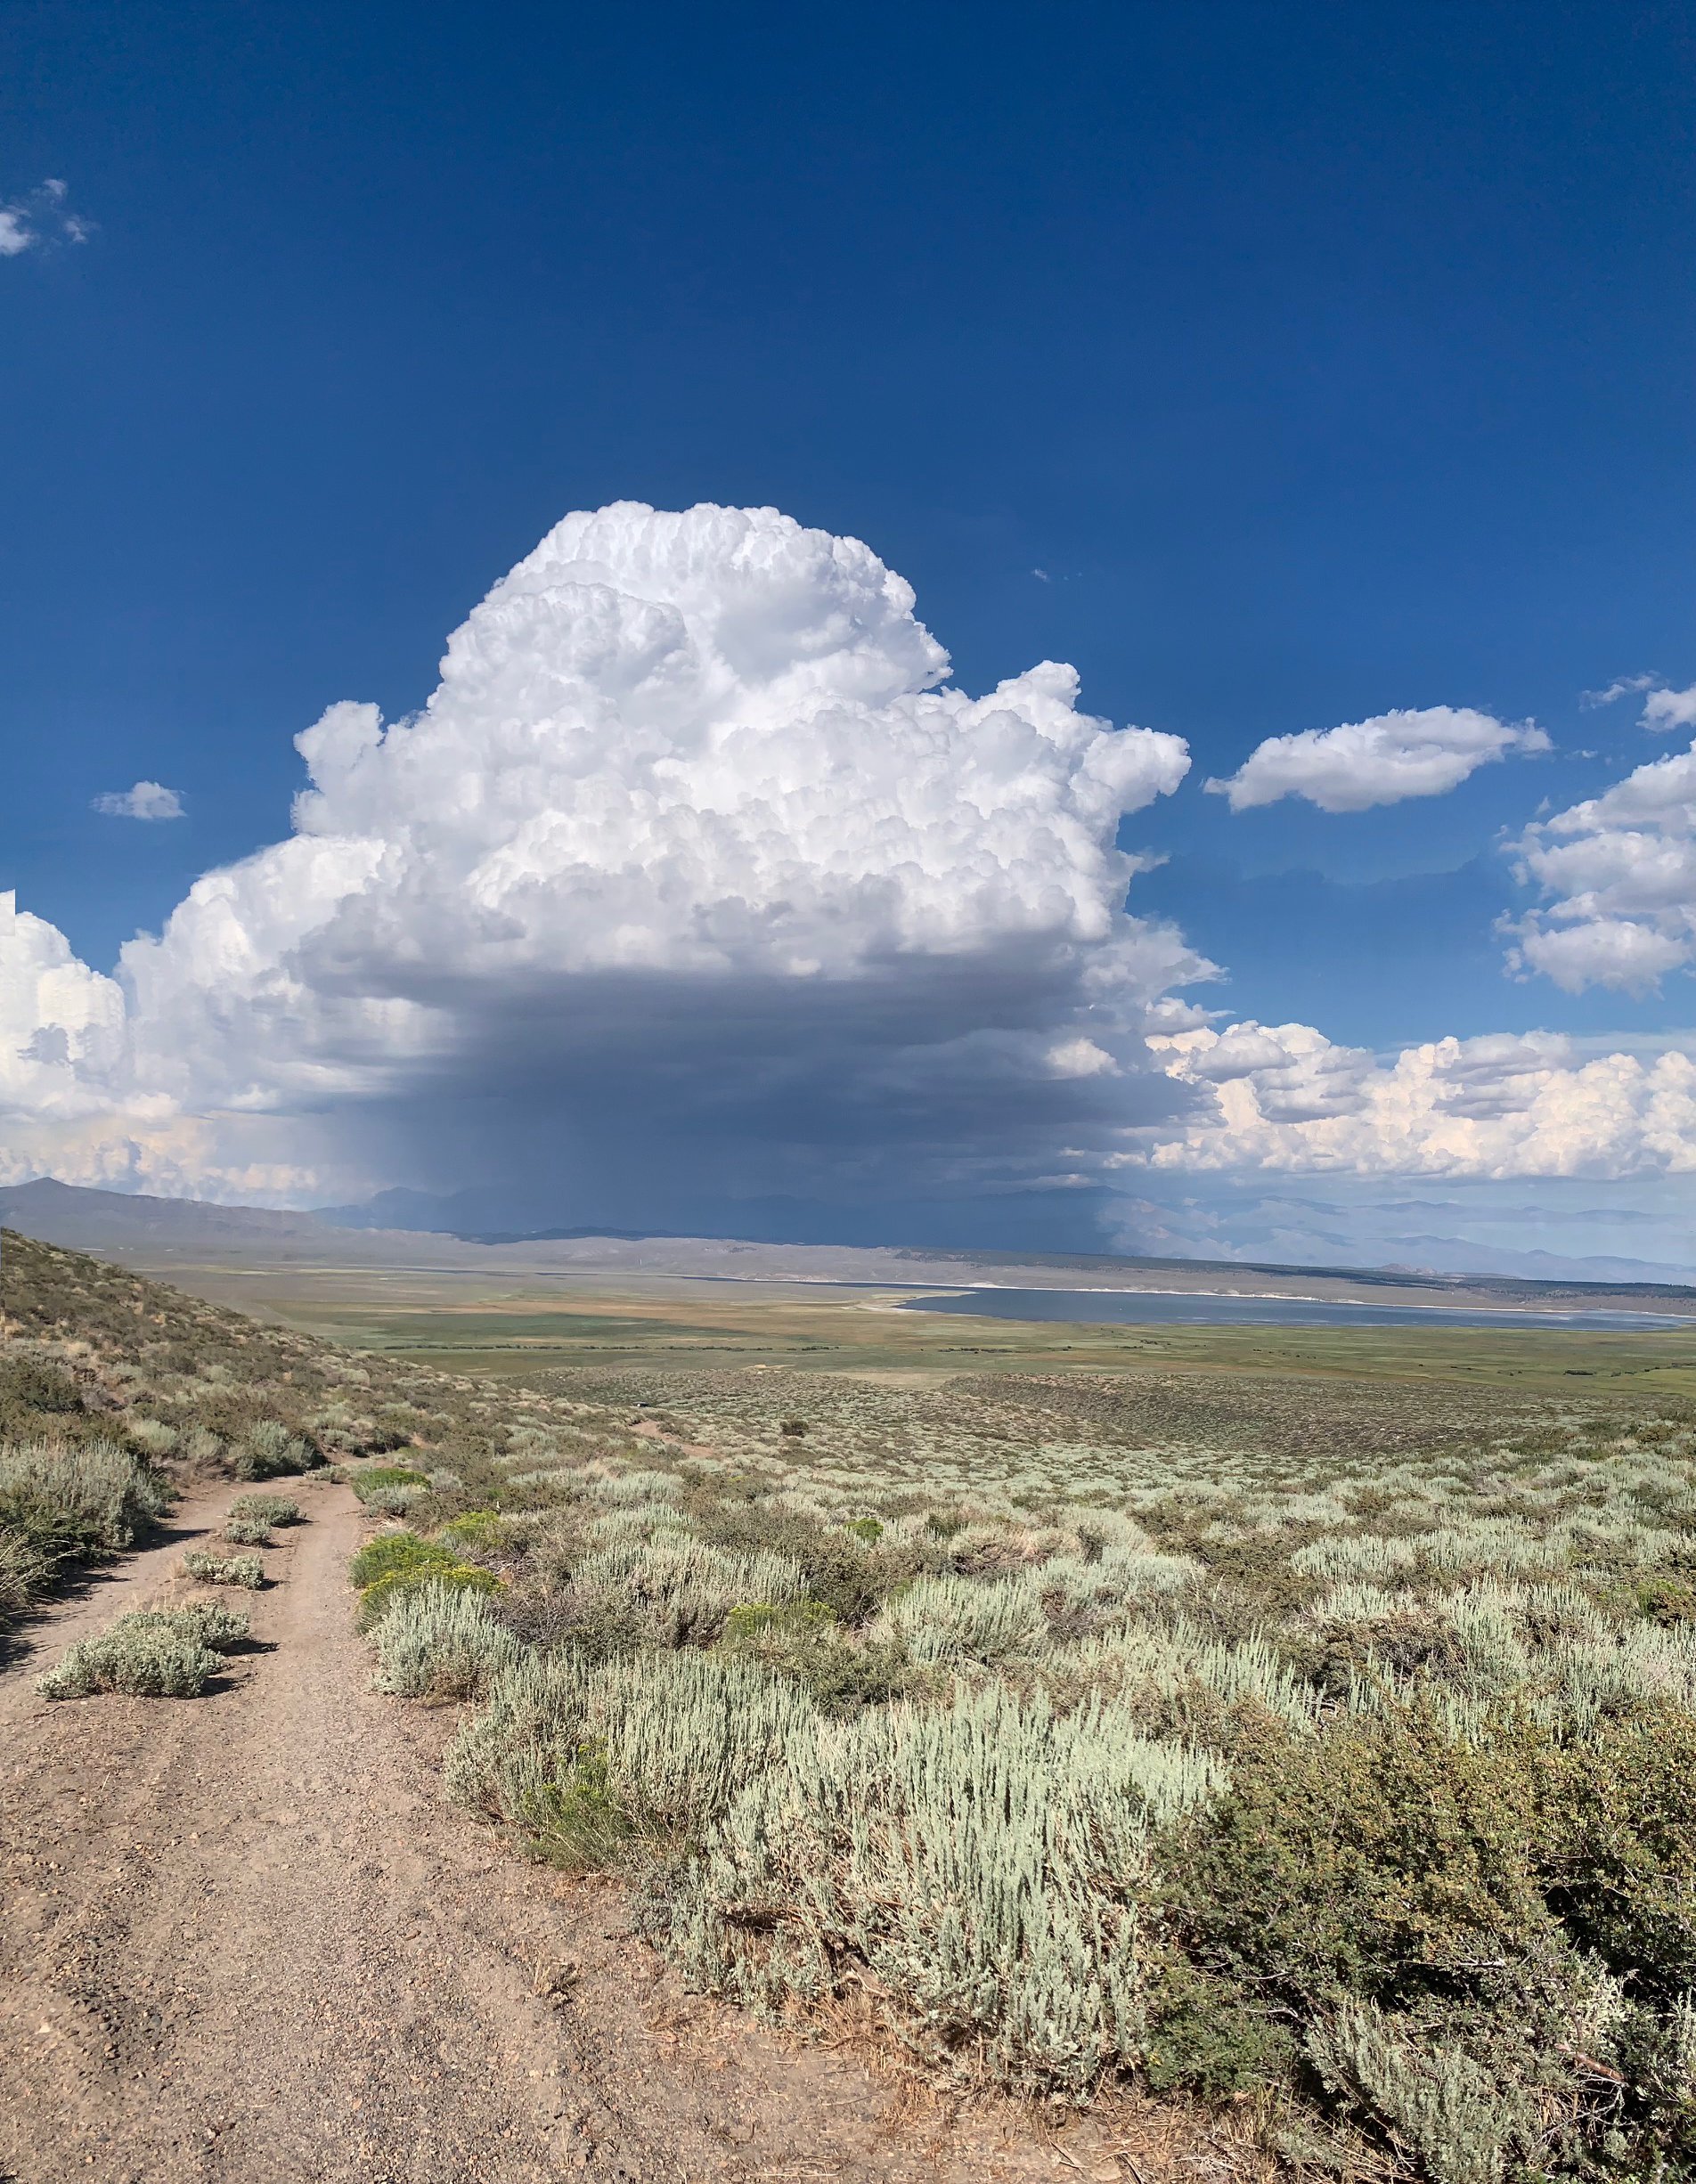 Summer storm over desert regions of Great Basin